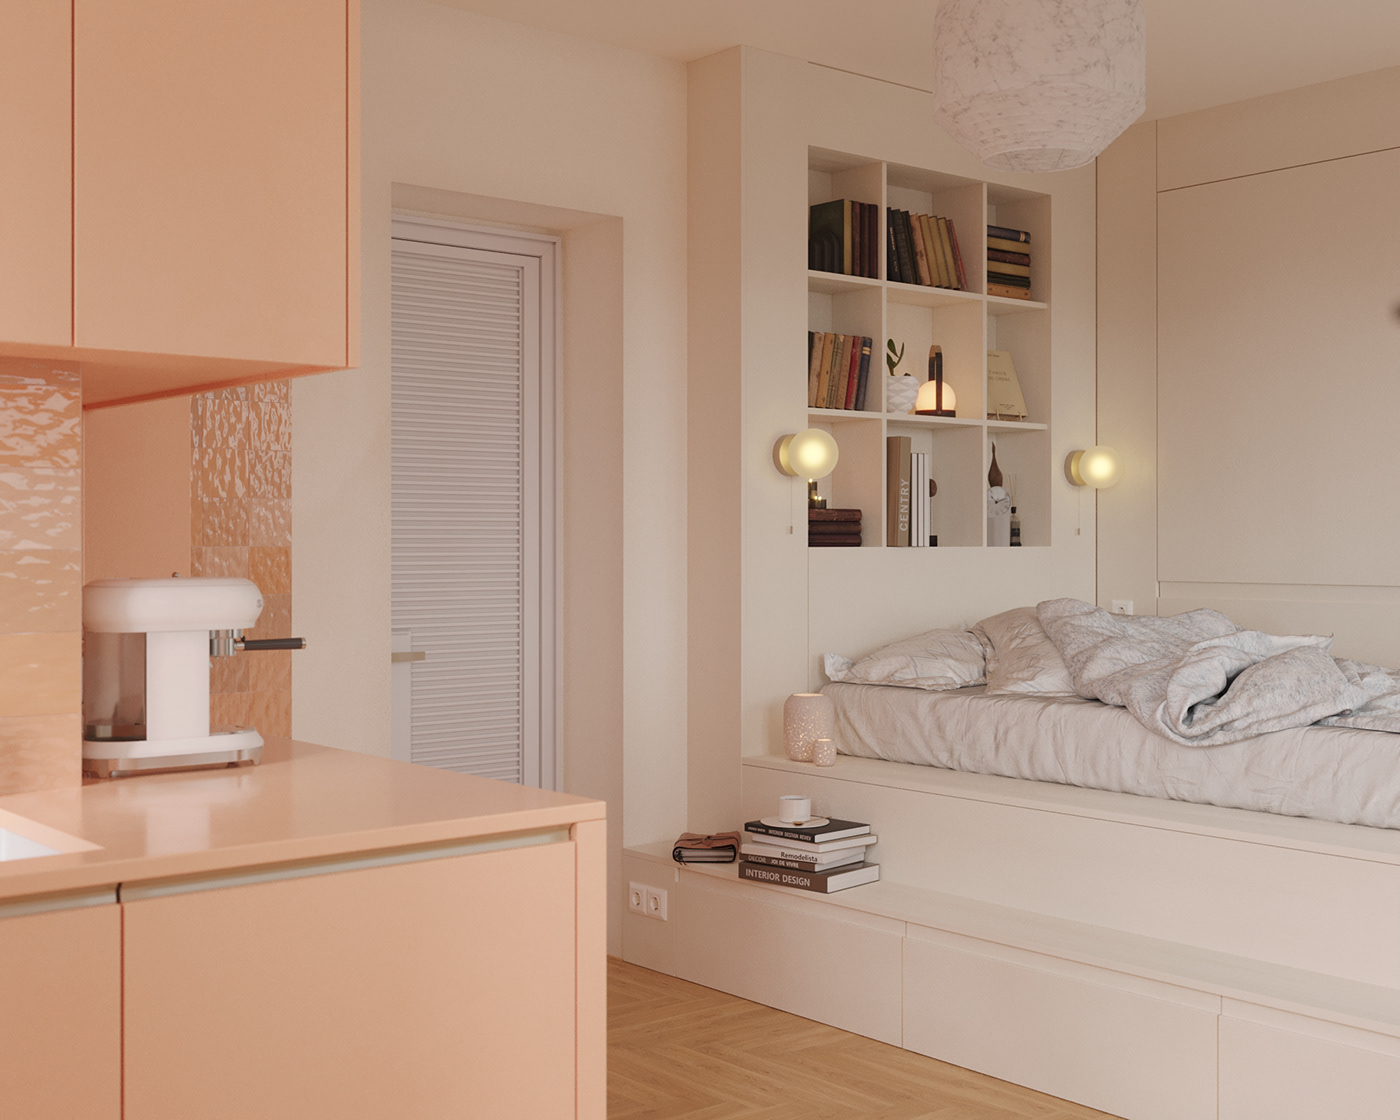 3ds max visualization interior design  corona pantone color kitchen design Render modern 3D